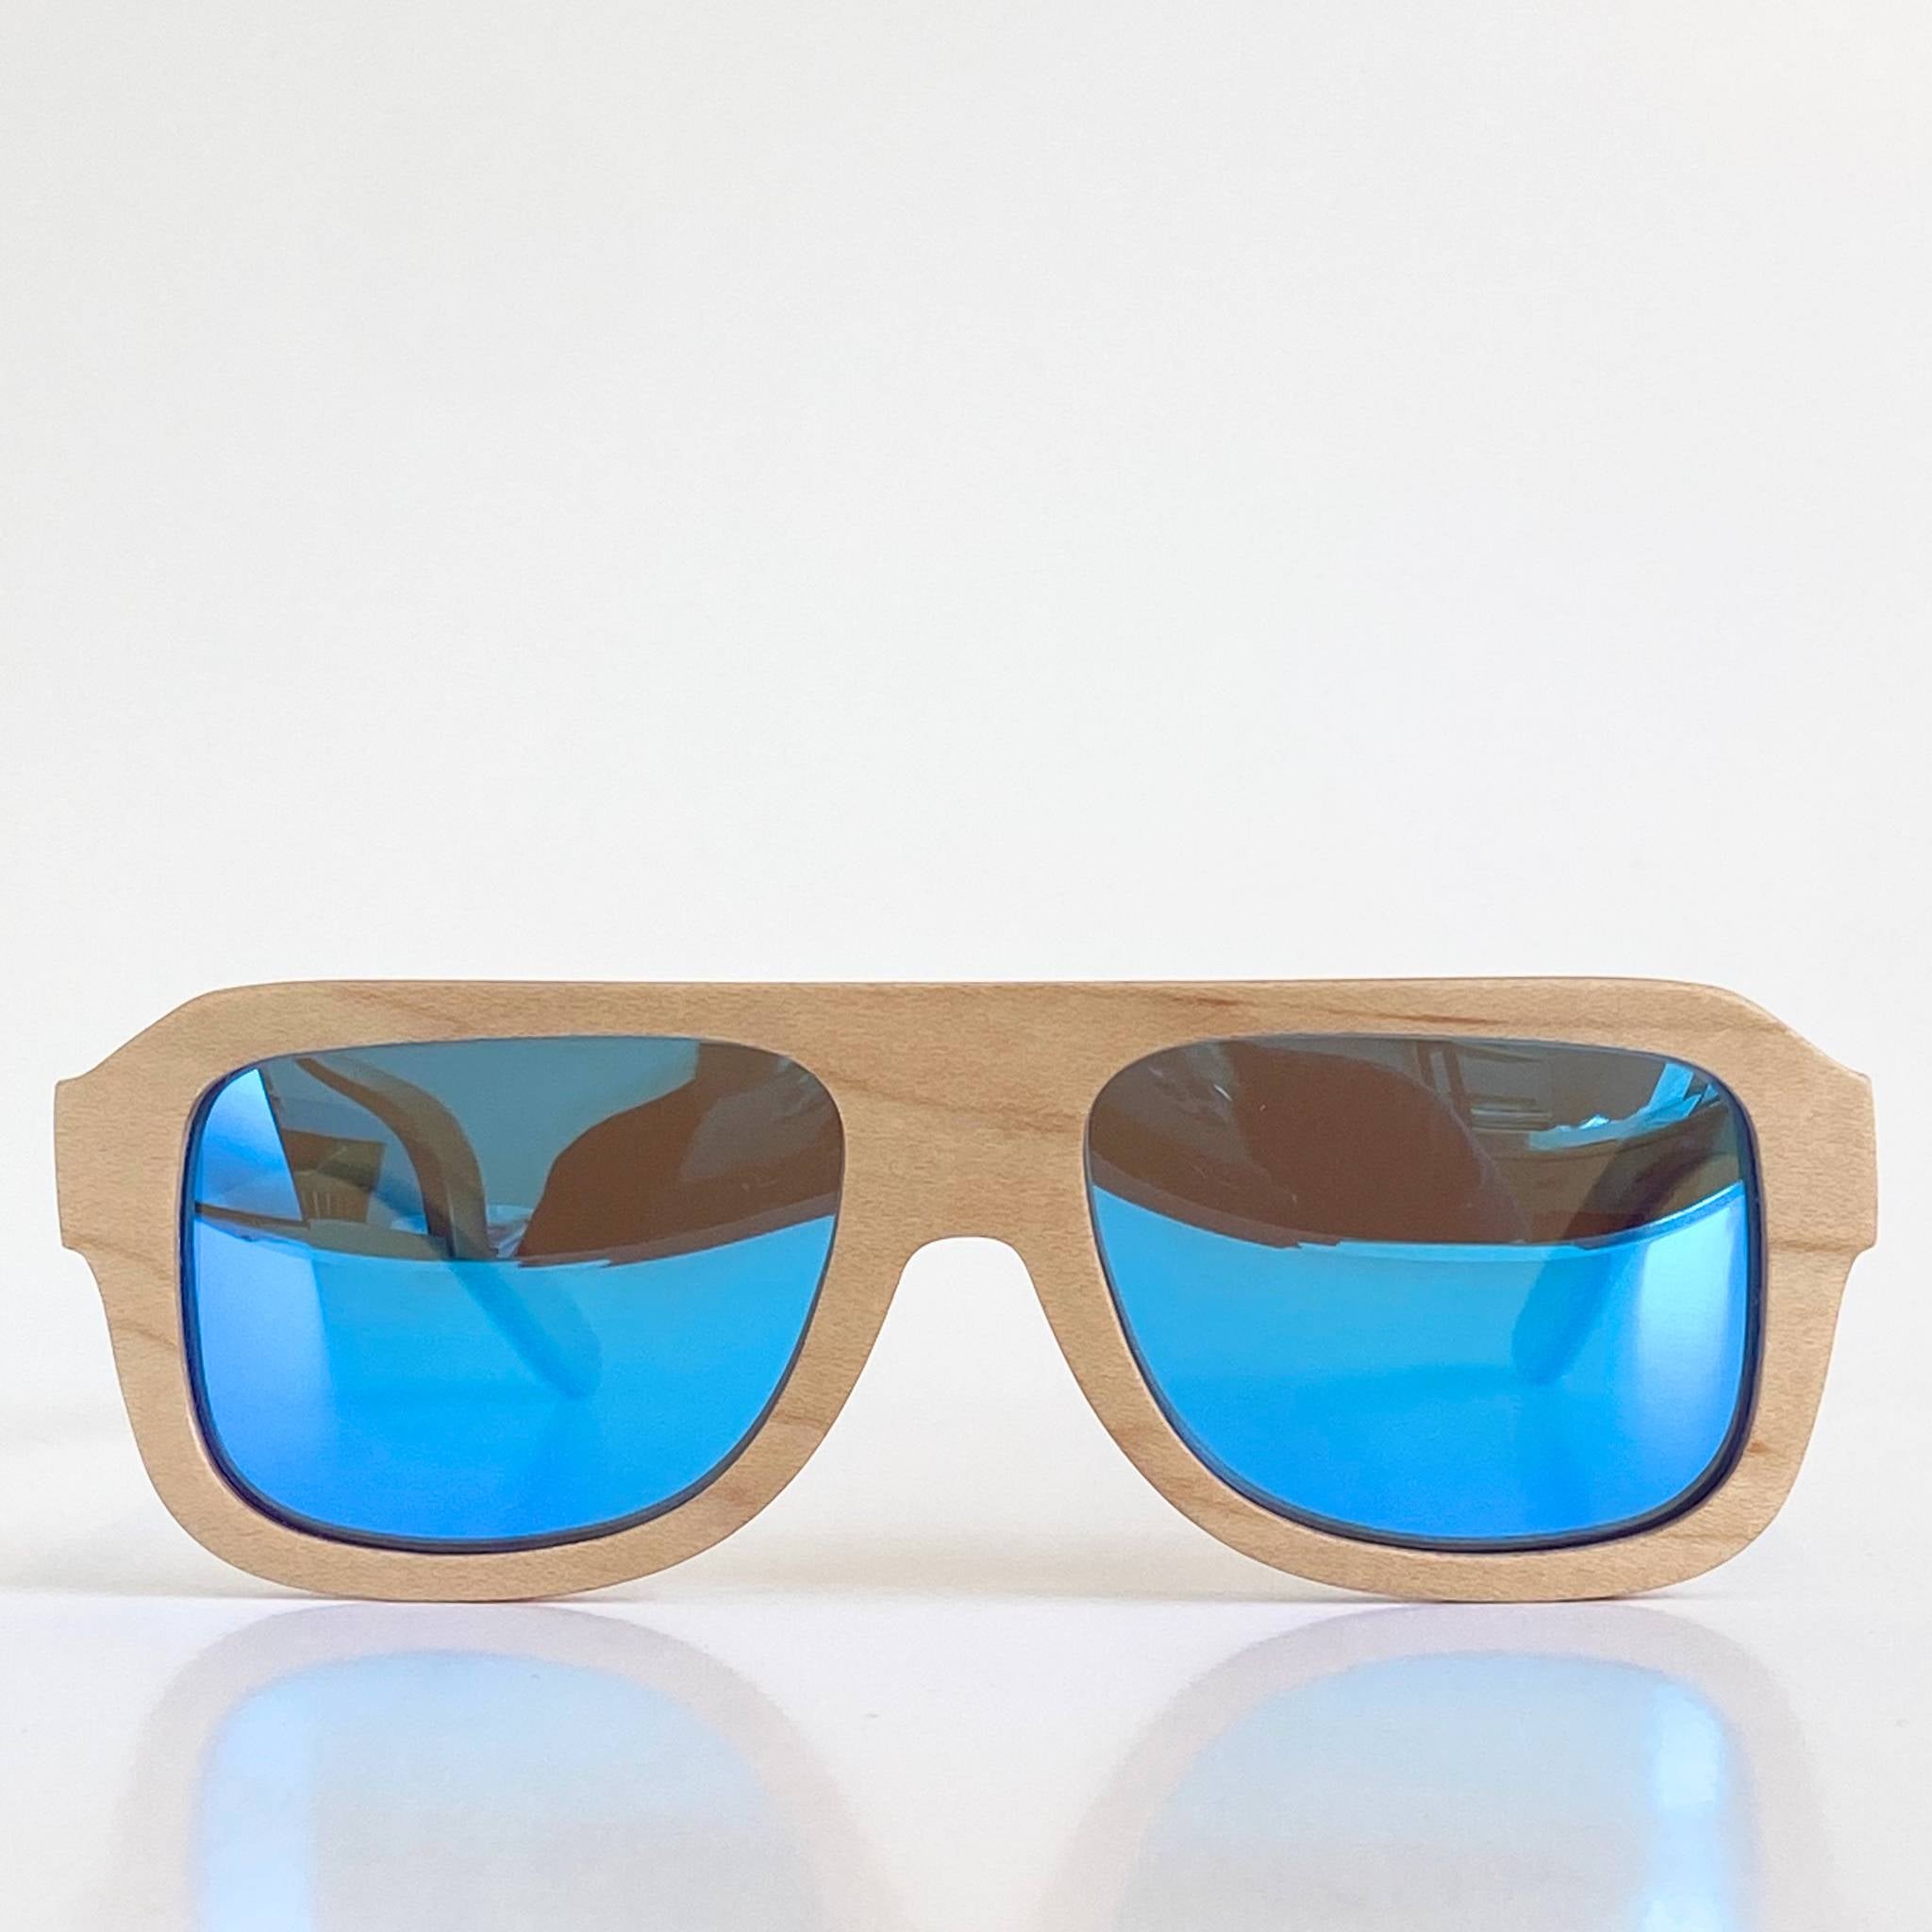 Liberator - Wood+Metal Sunglasses - RawWood Shades